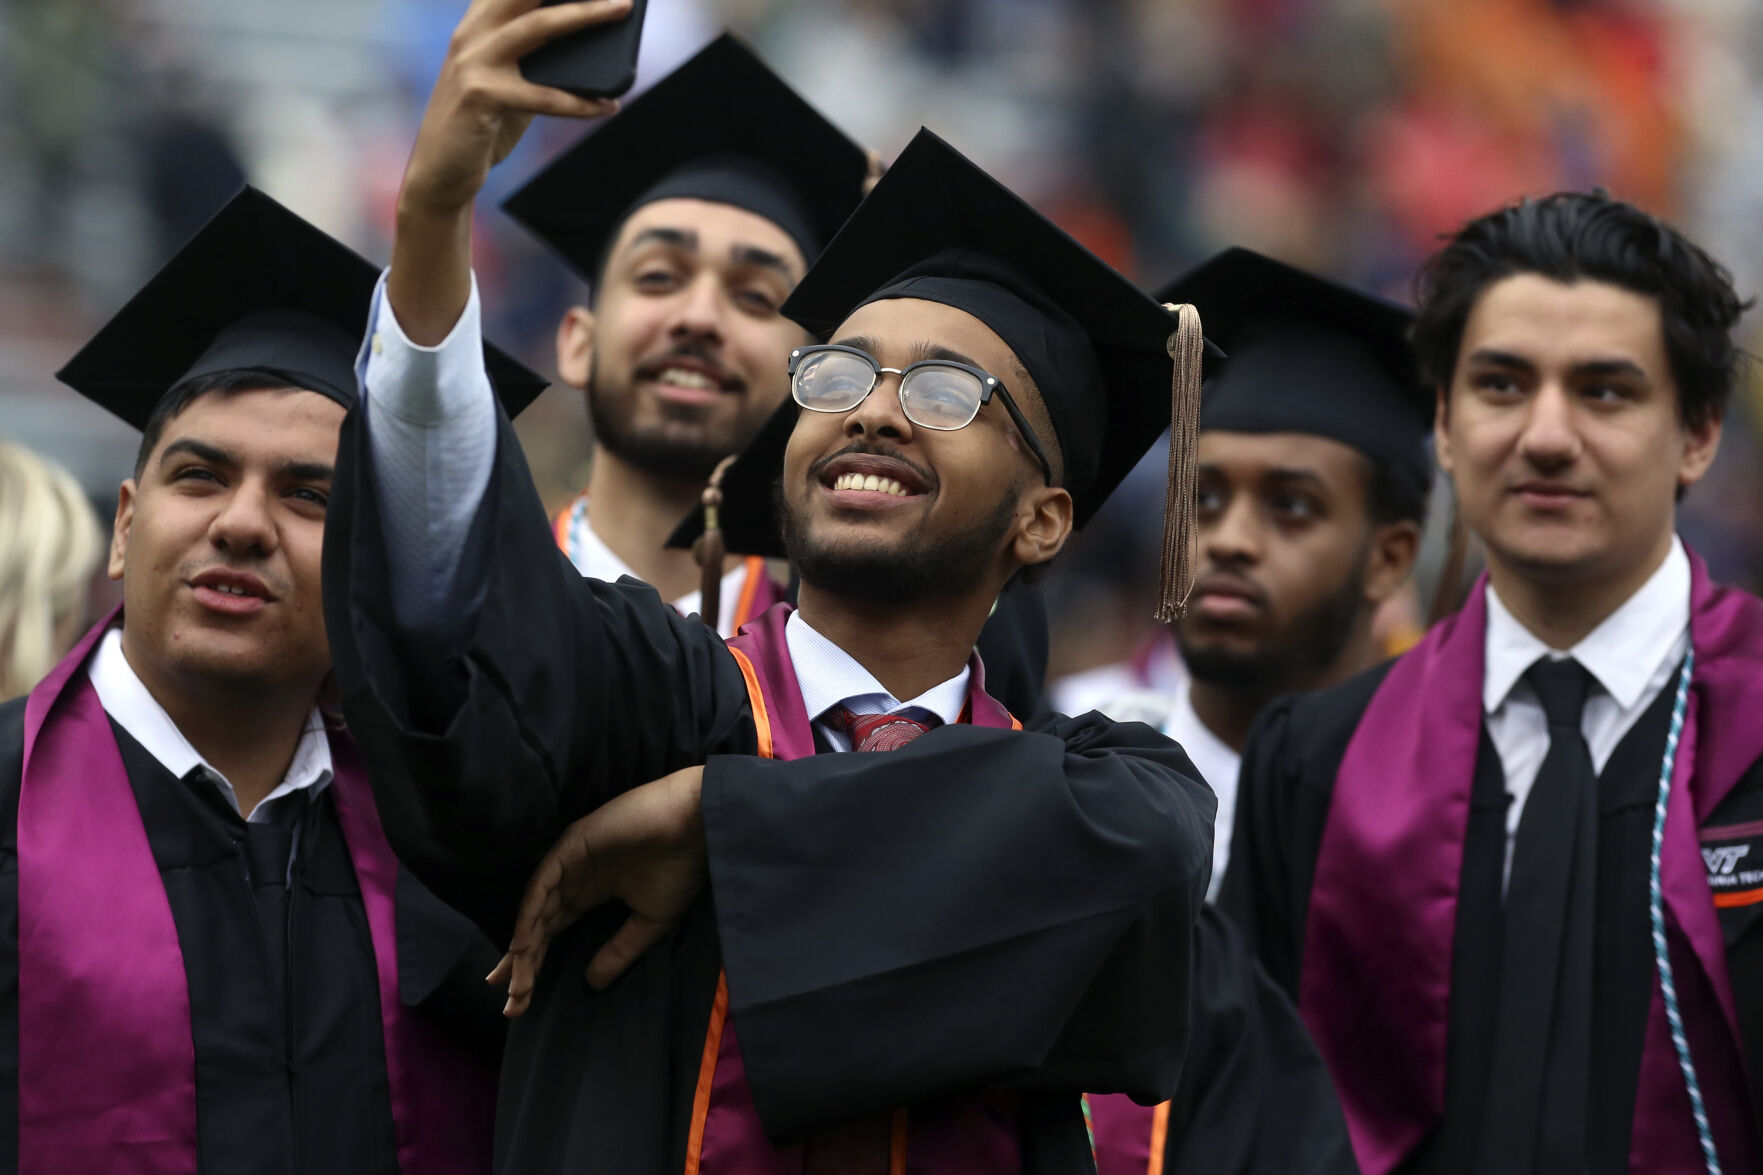 Stranger degrees: Odd graduate degrees offered by Virginia Tech |  Lifestyles | collegiatetimes.com